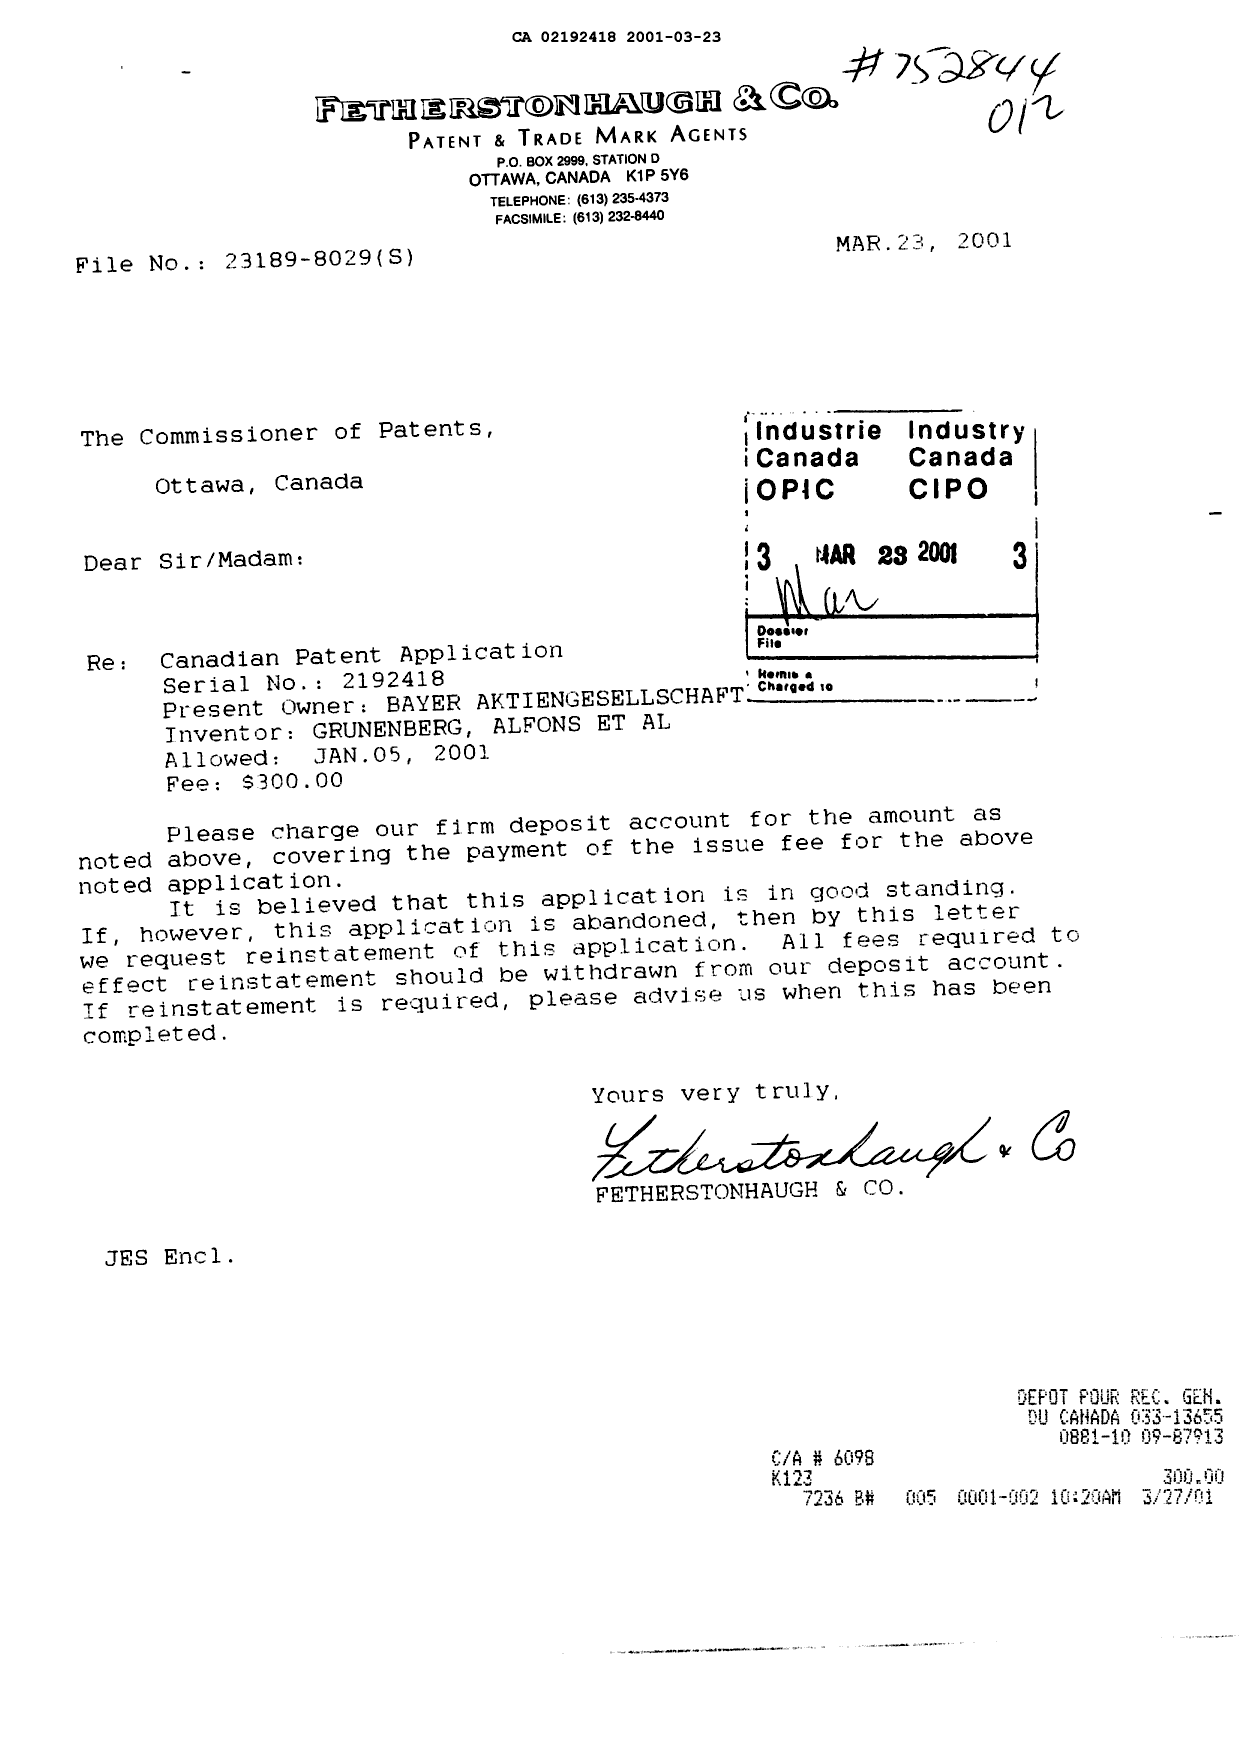 Canadian Patent Document 2192418. Correspondence 20001223. Image 1 of 1